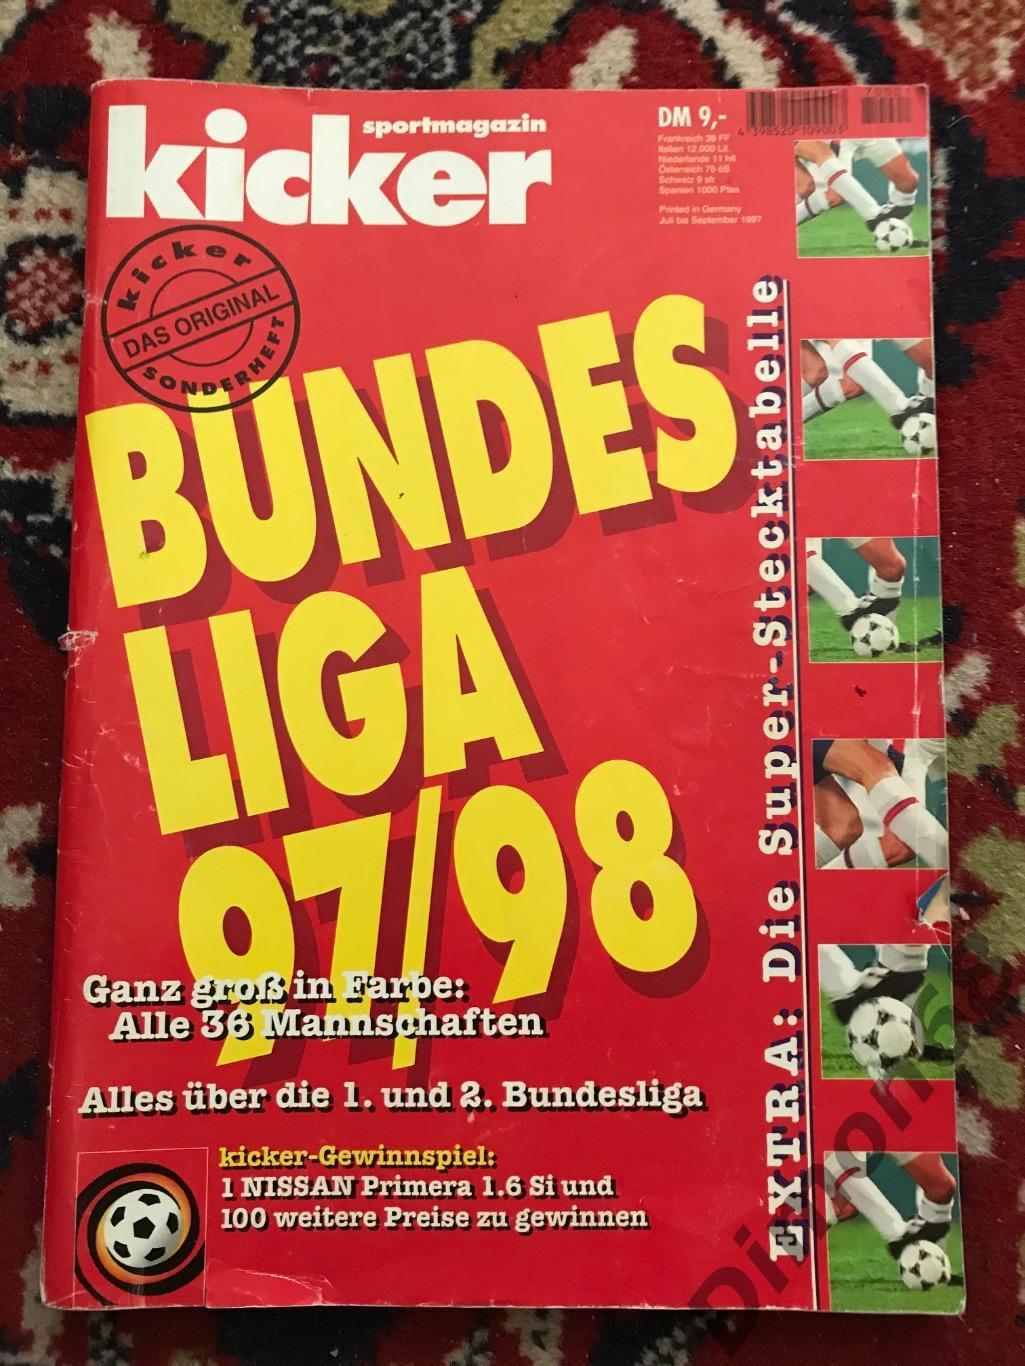 Kicker Bundesliga 97/98